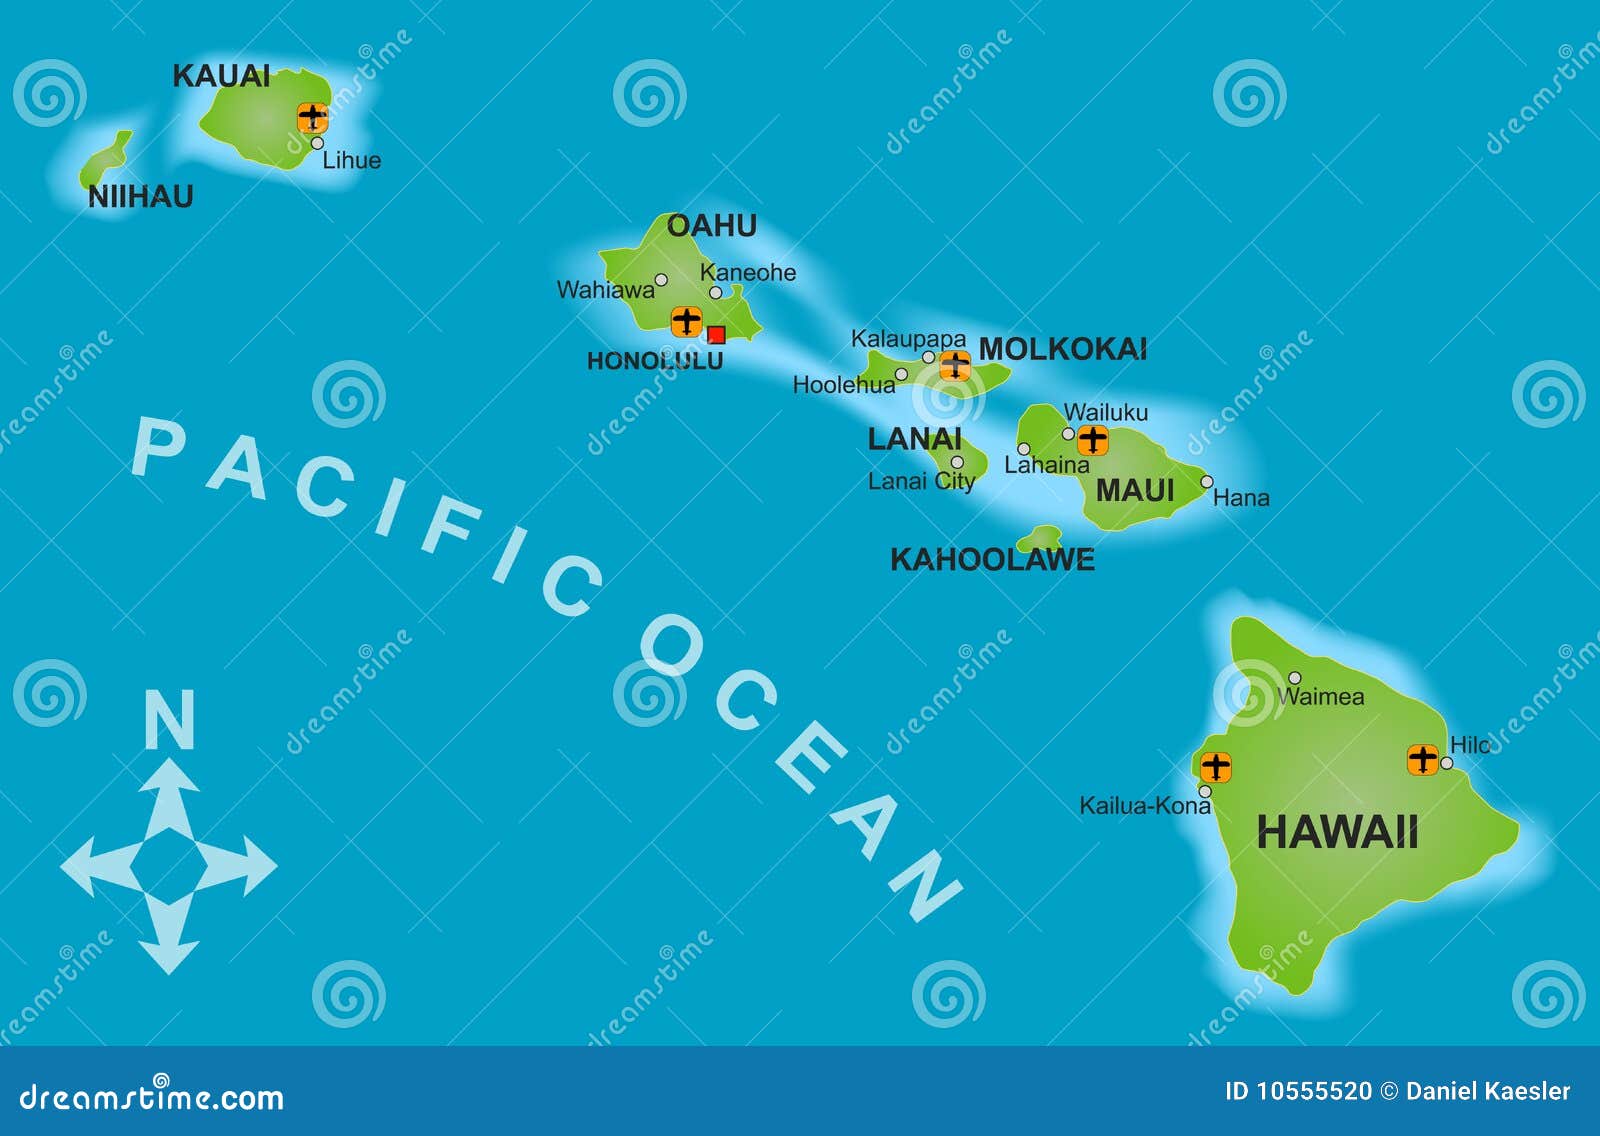 free clipart hawaii map - photo #36